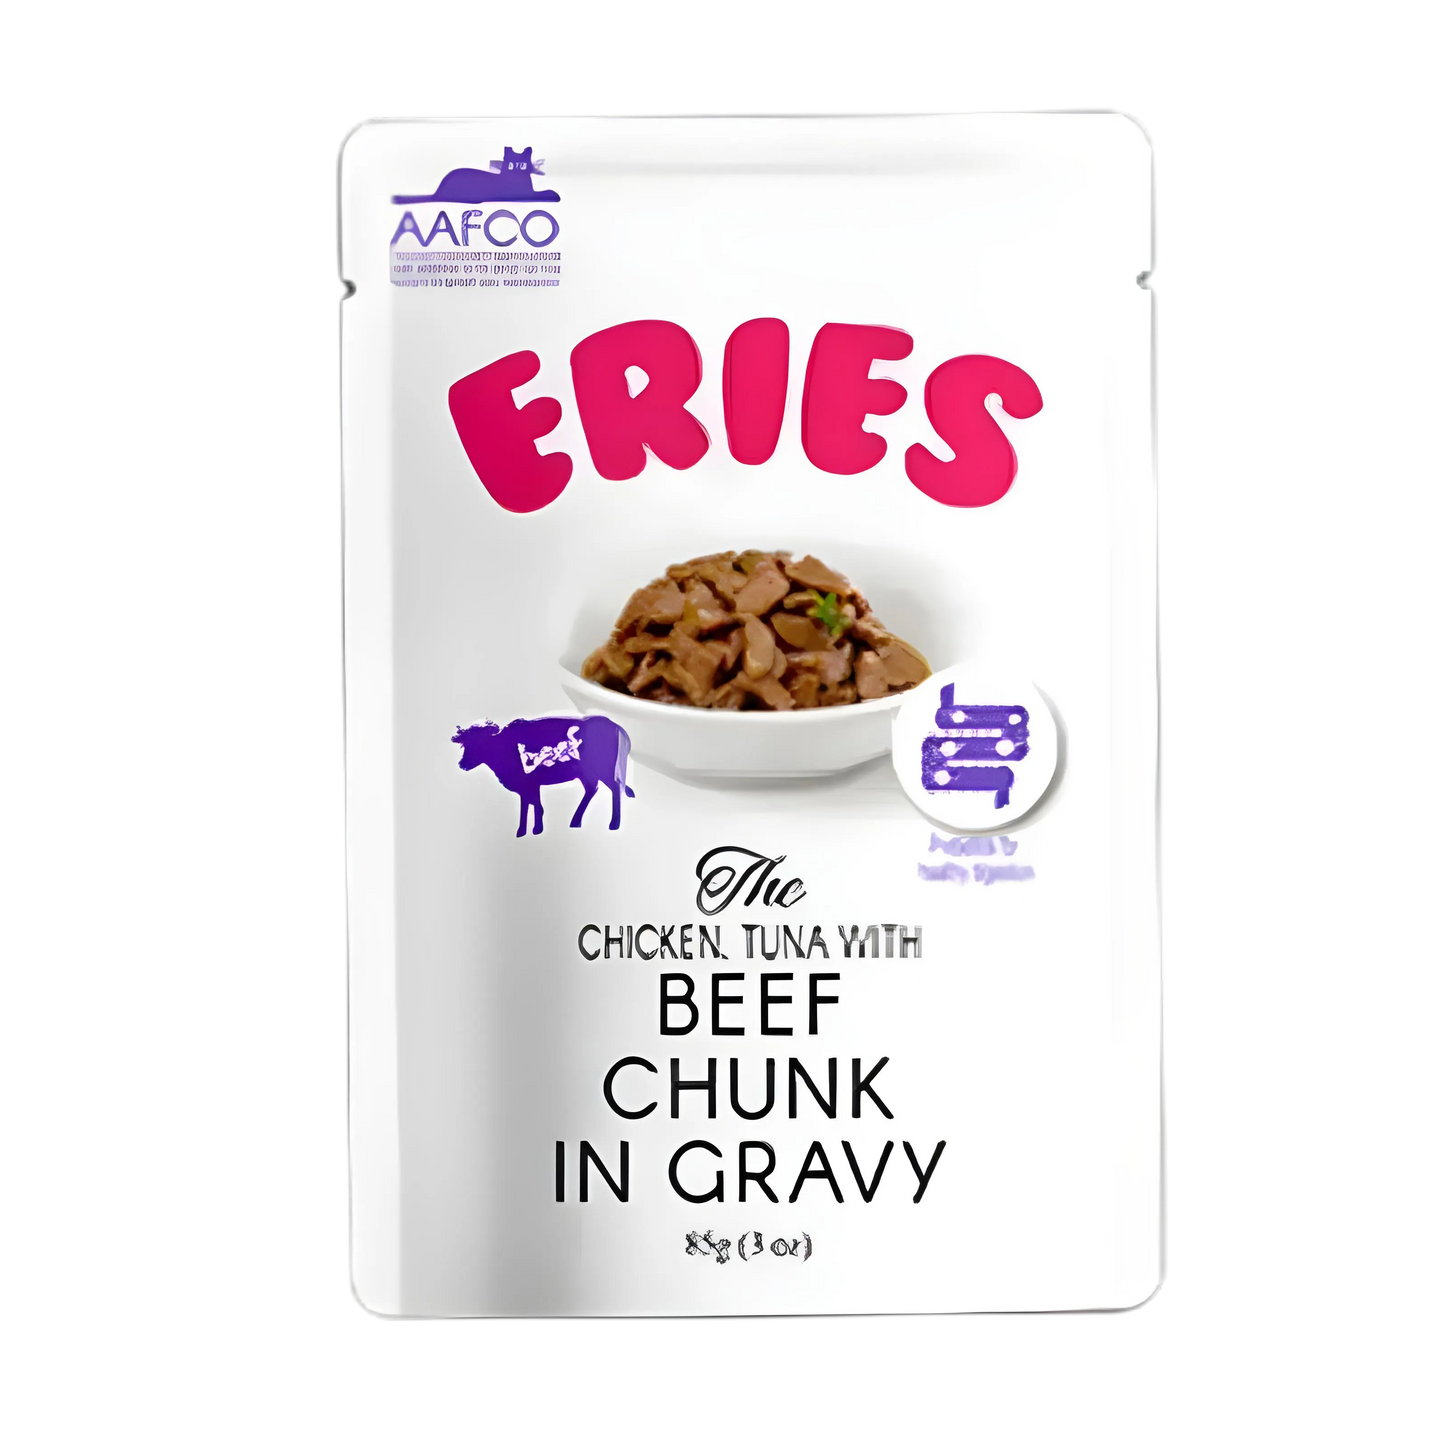 Copy of Eries Pouch in Gravy Beef Chuck 85g x12-Eries-Catsmart-express